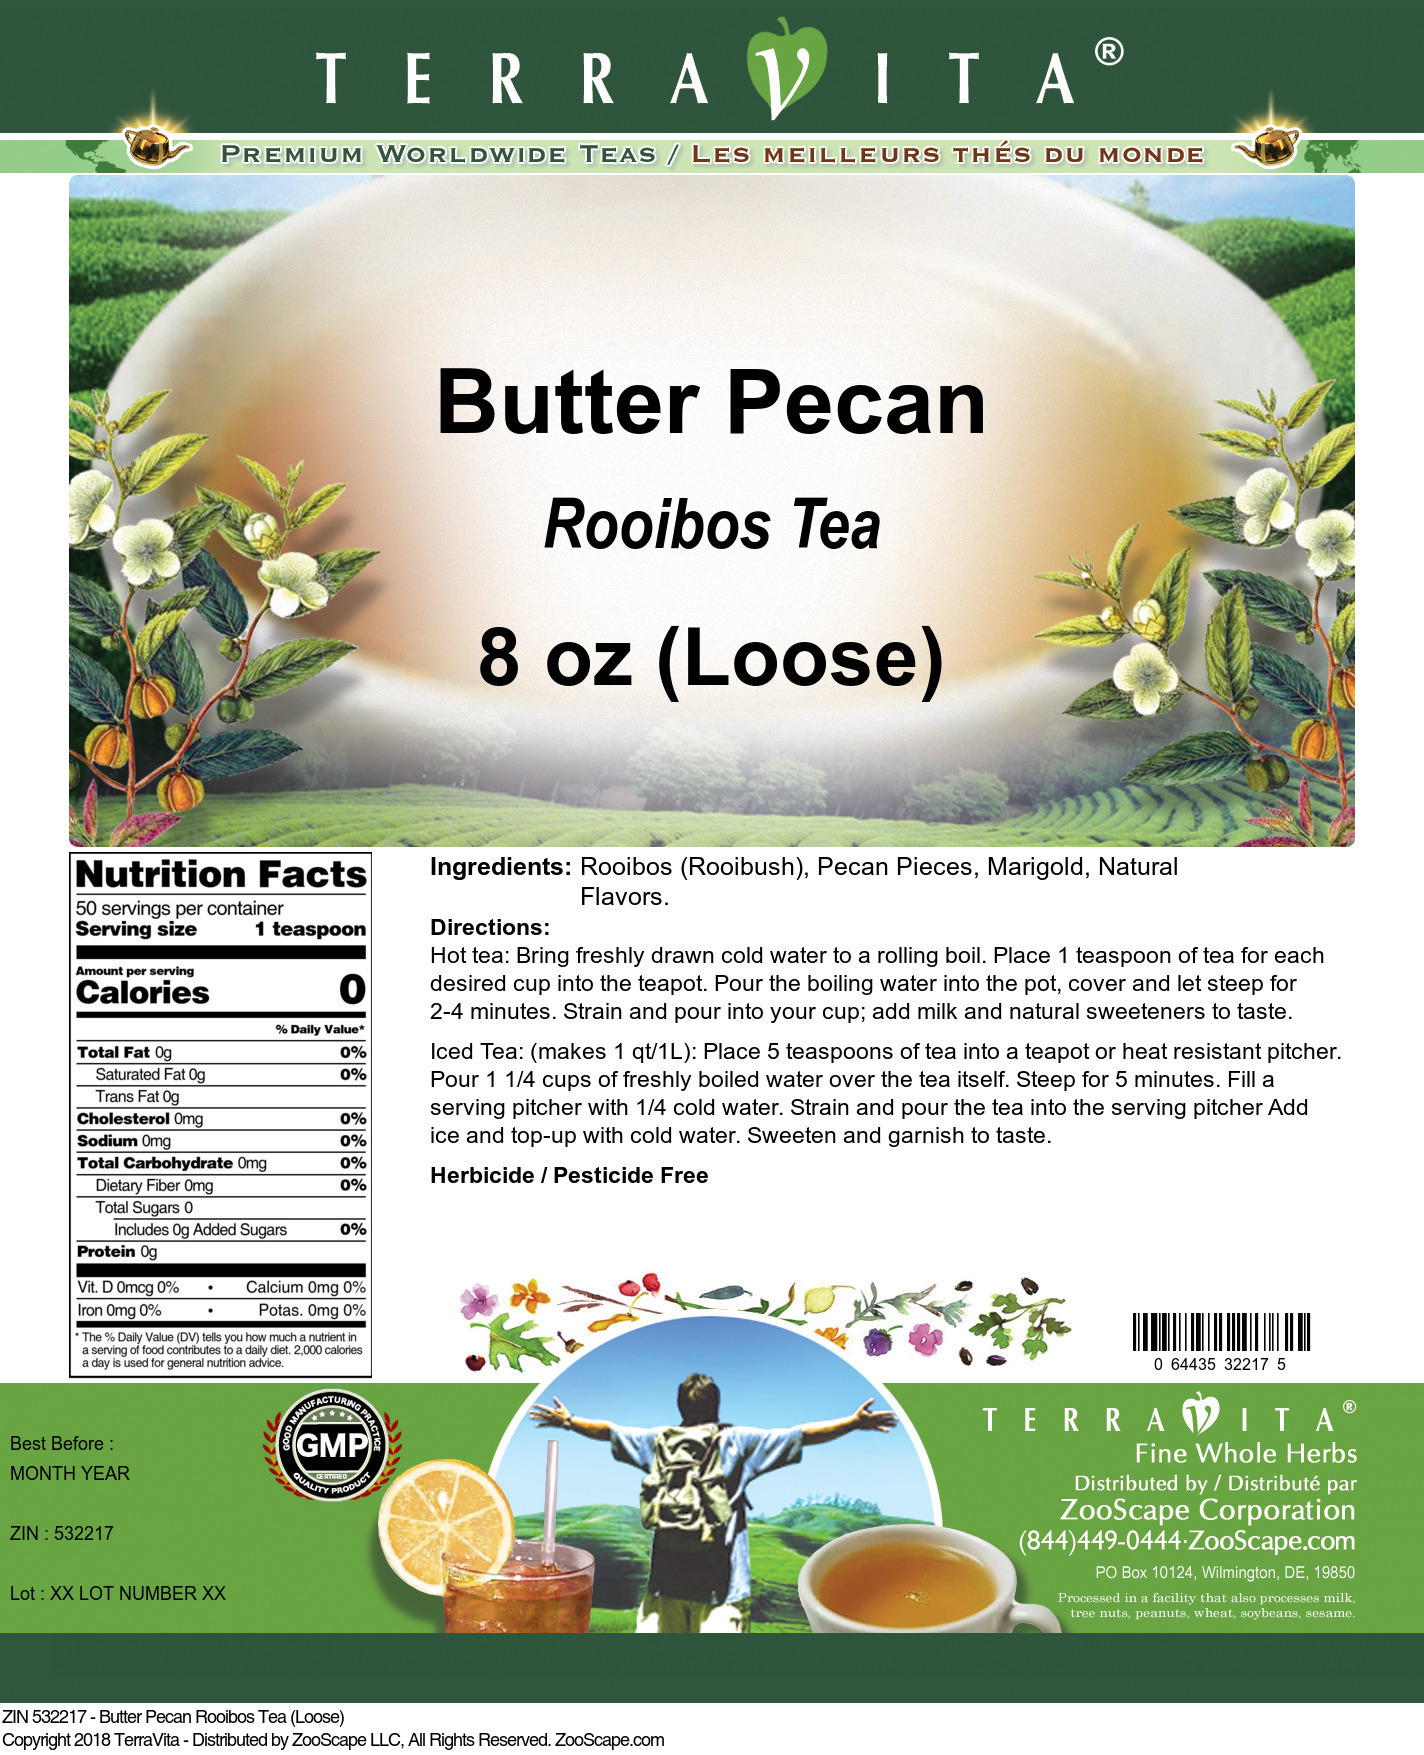 Butter Pecan Rooibos Tea (Loose) - Label